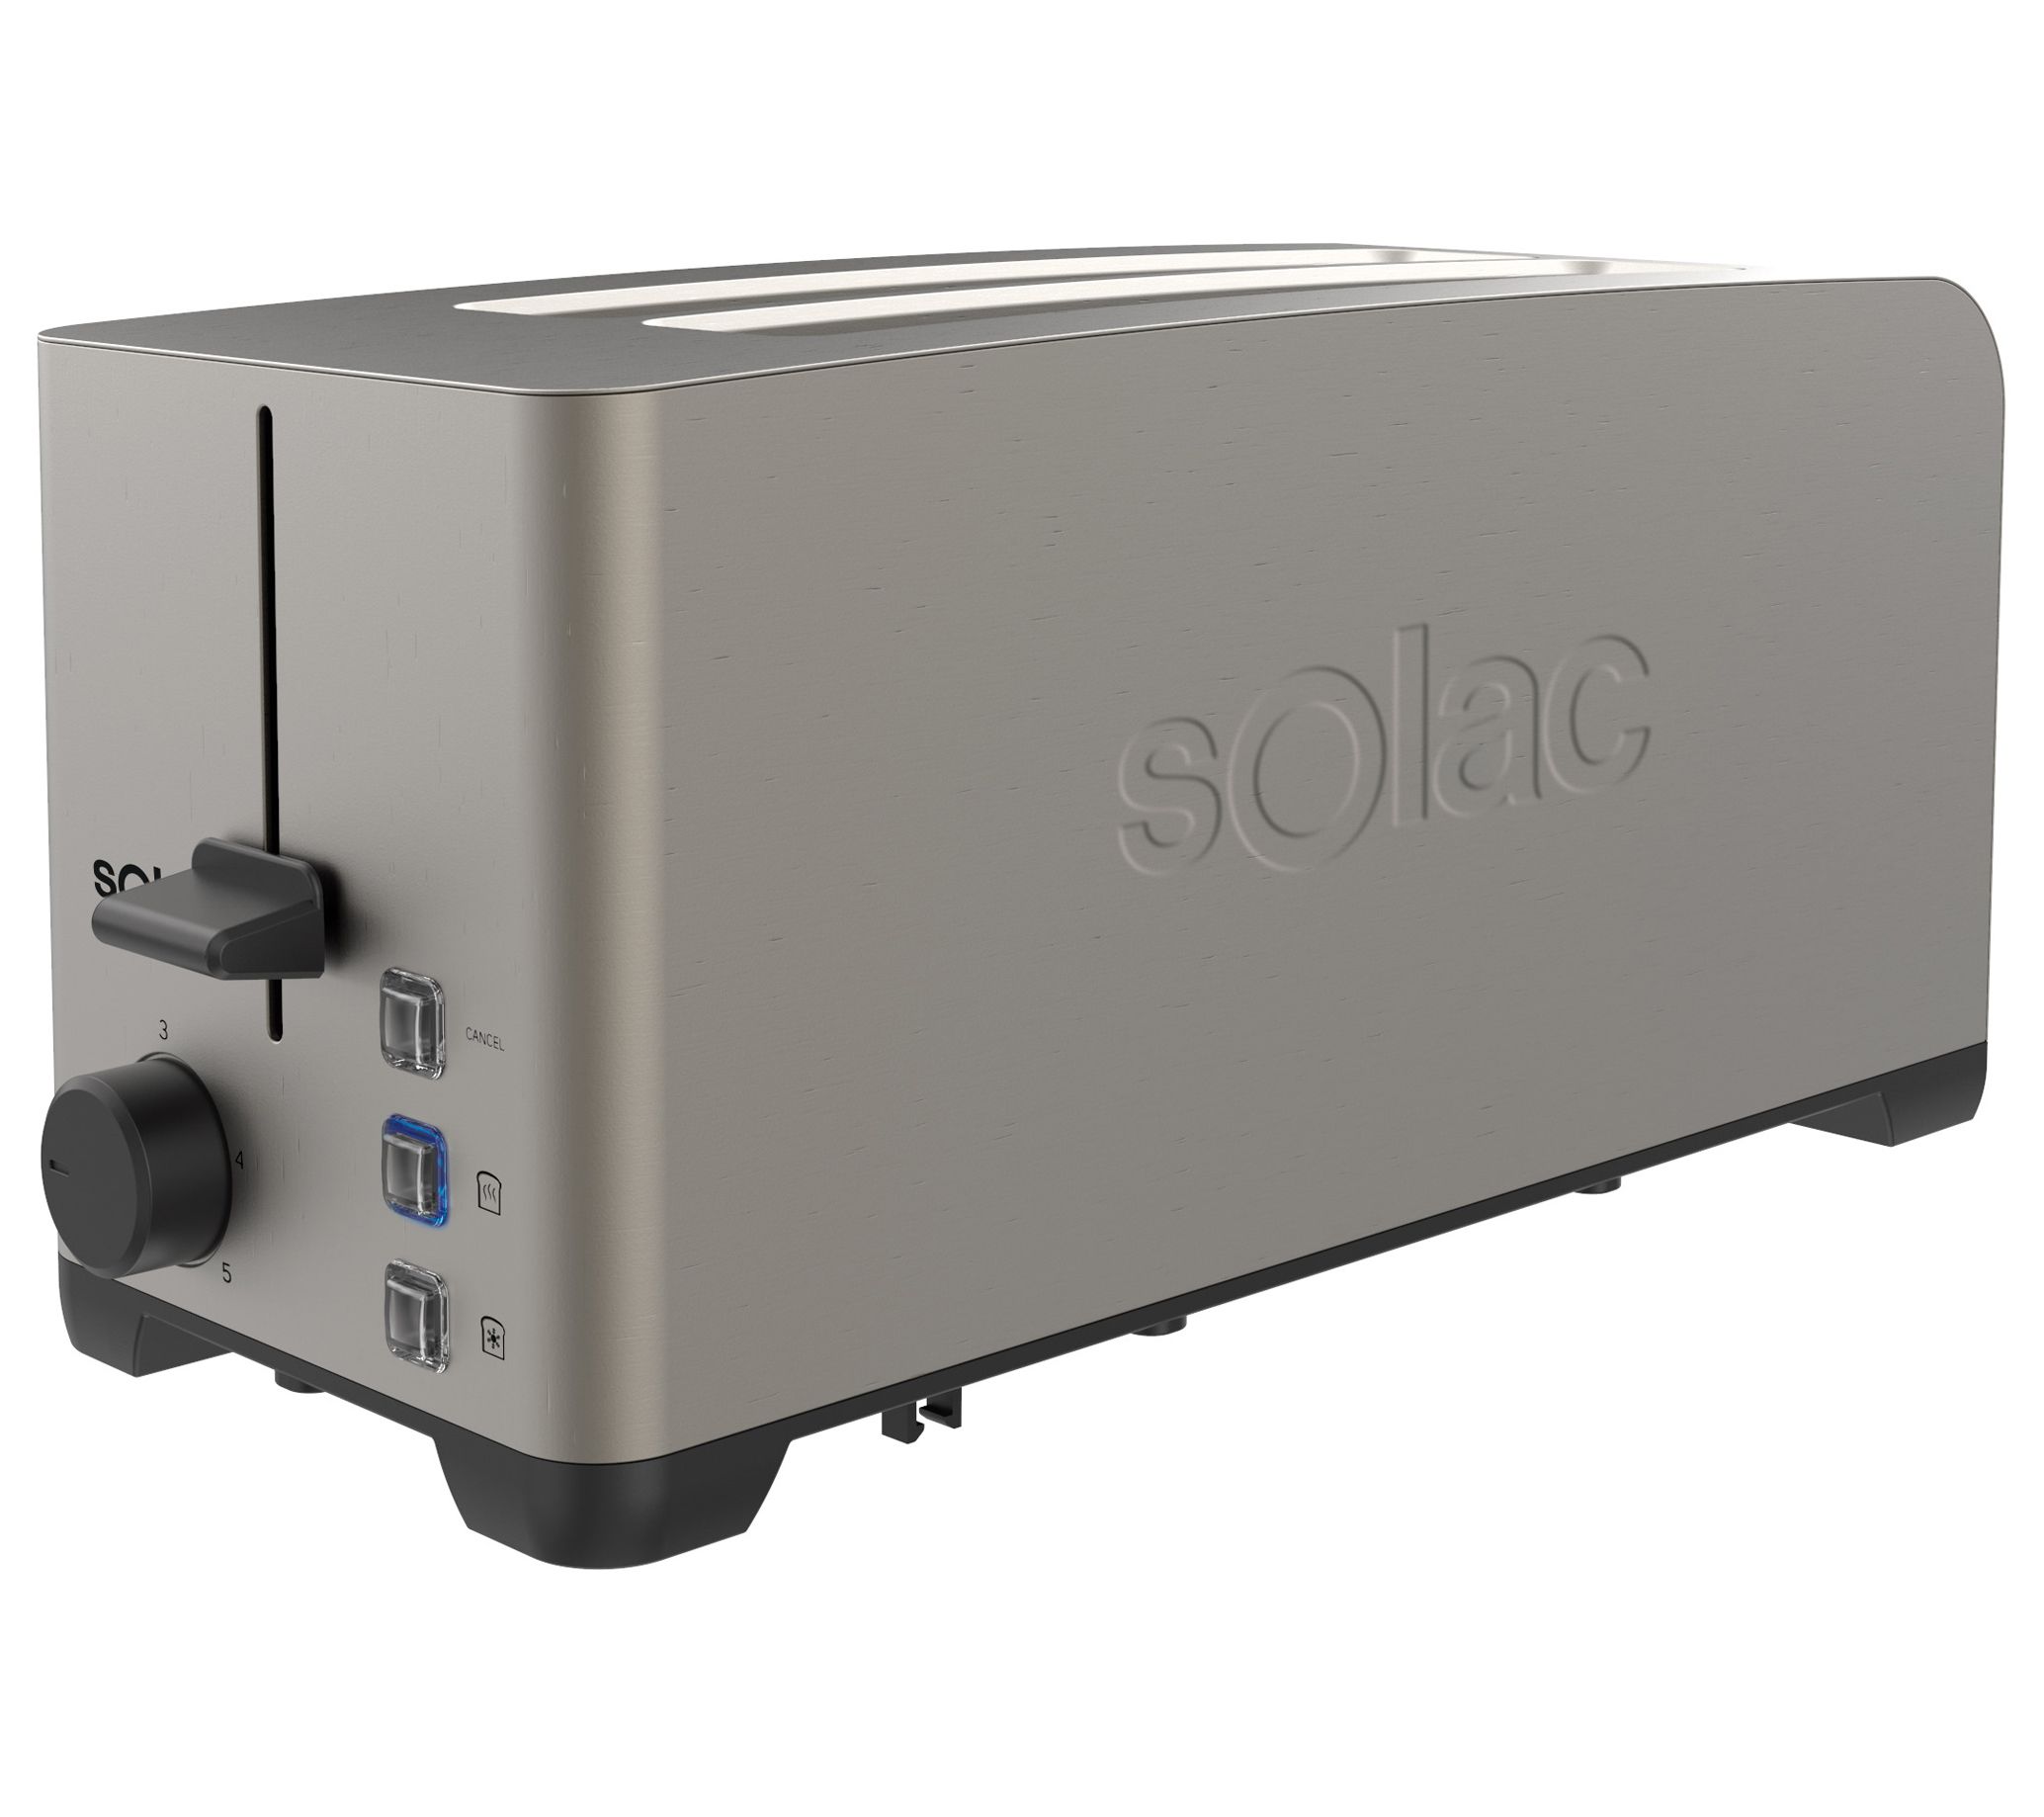 Salton 2 Slice Long Slot Toaster - Stainless Steel 